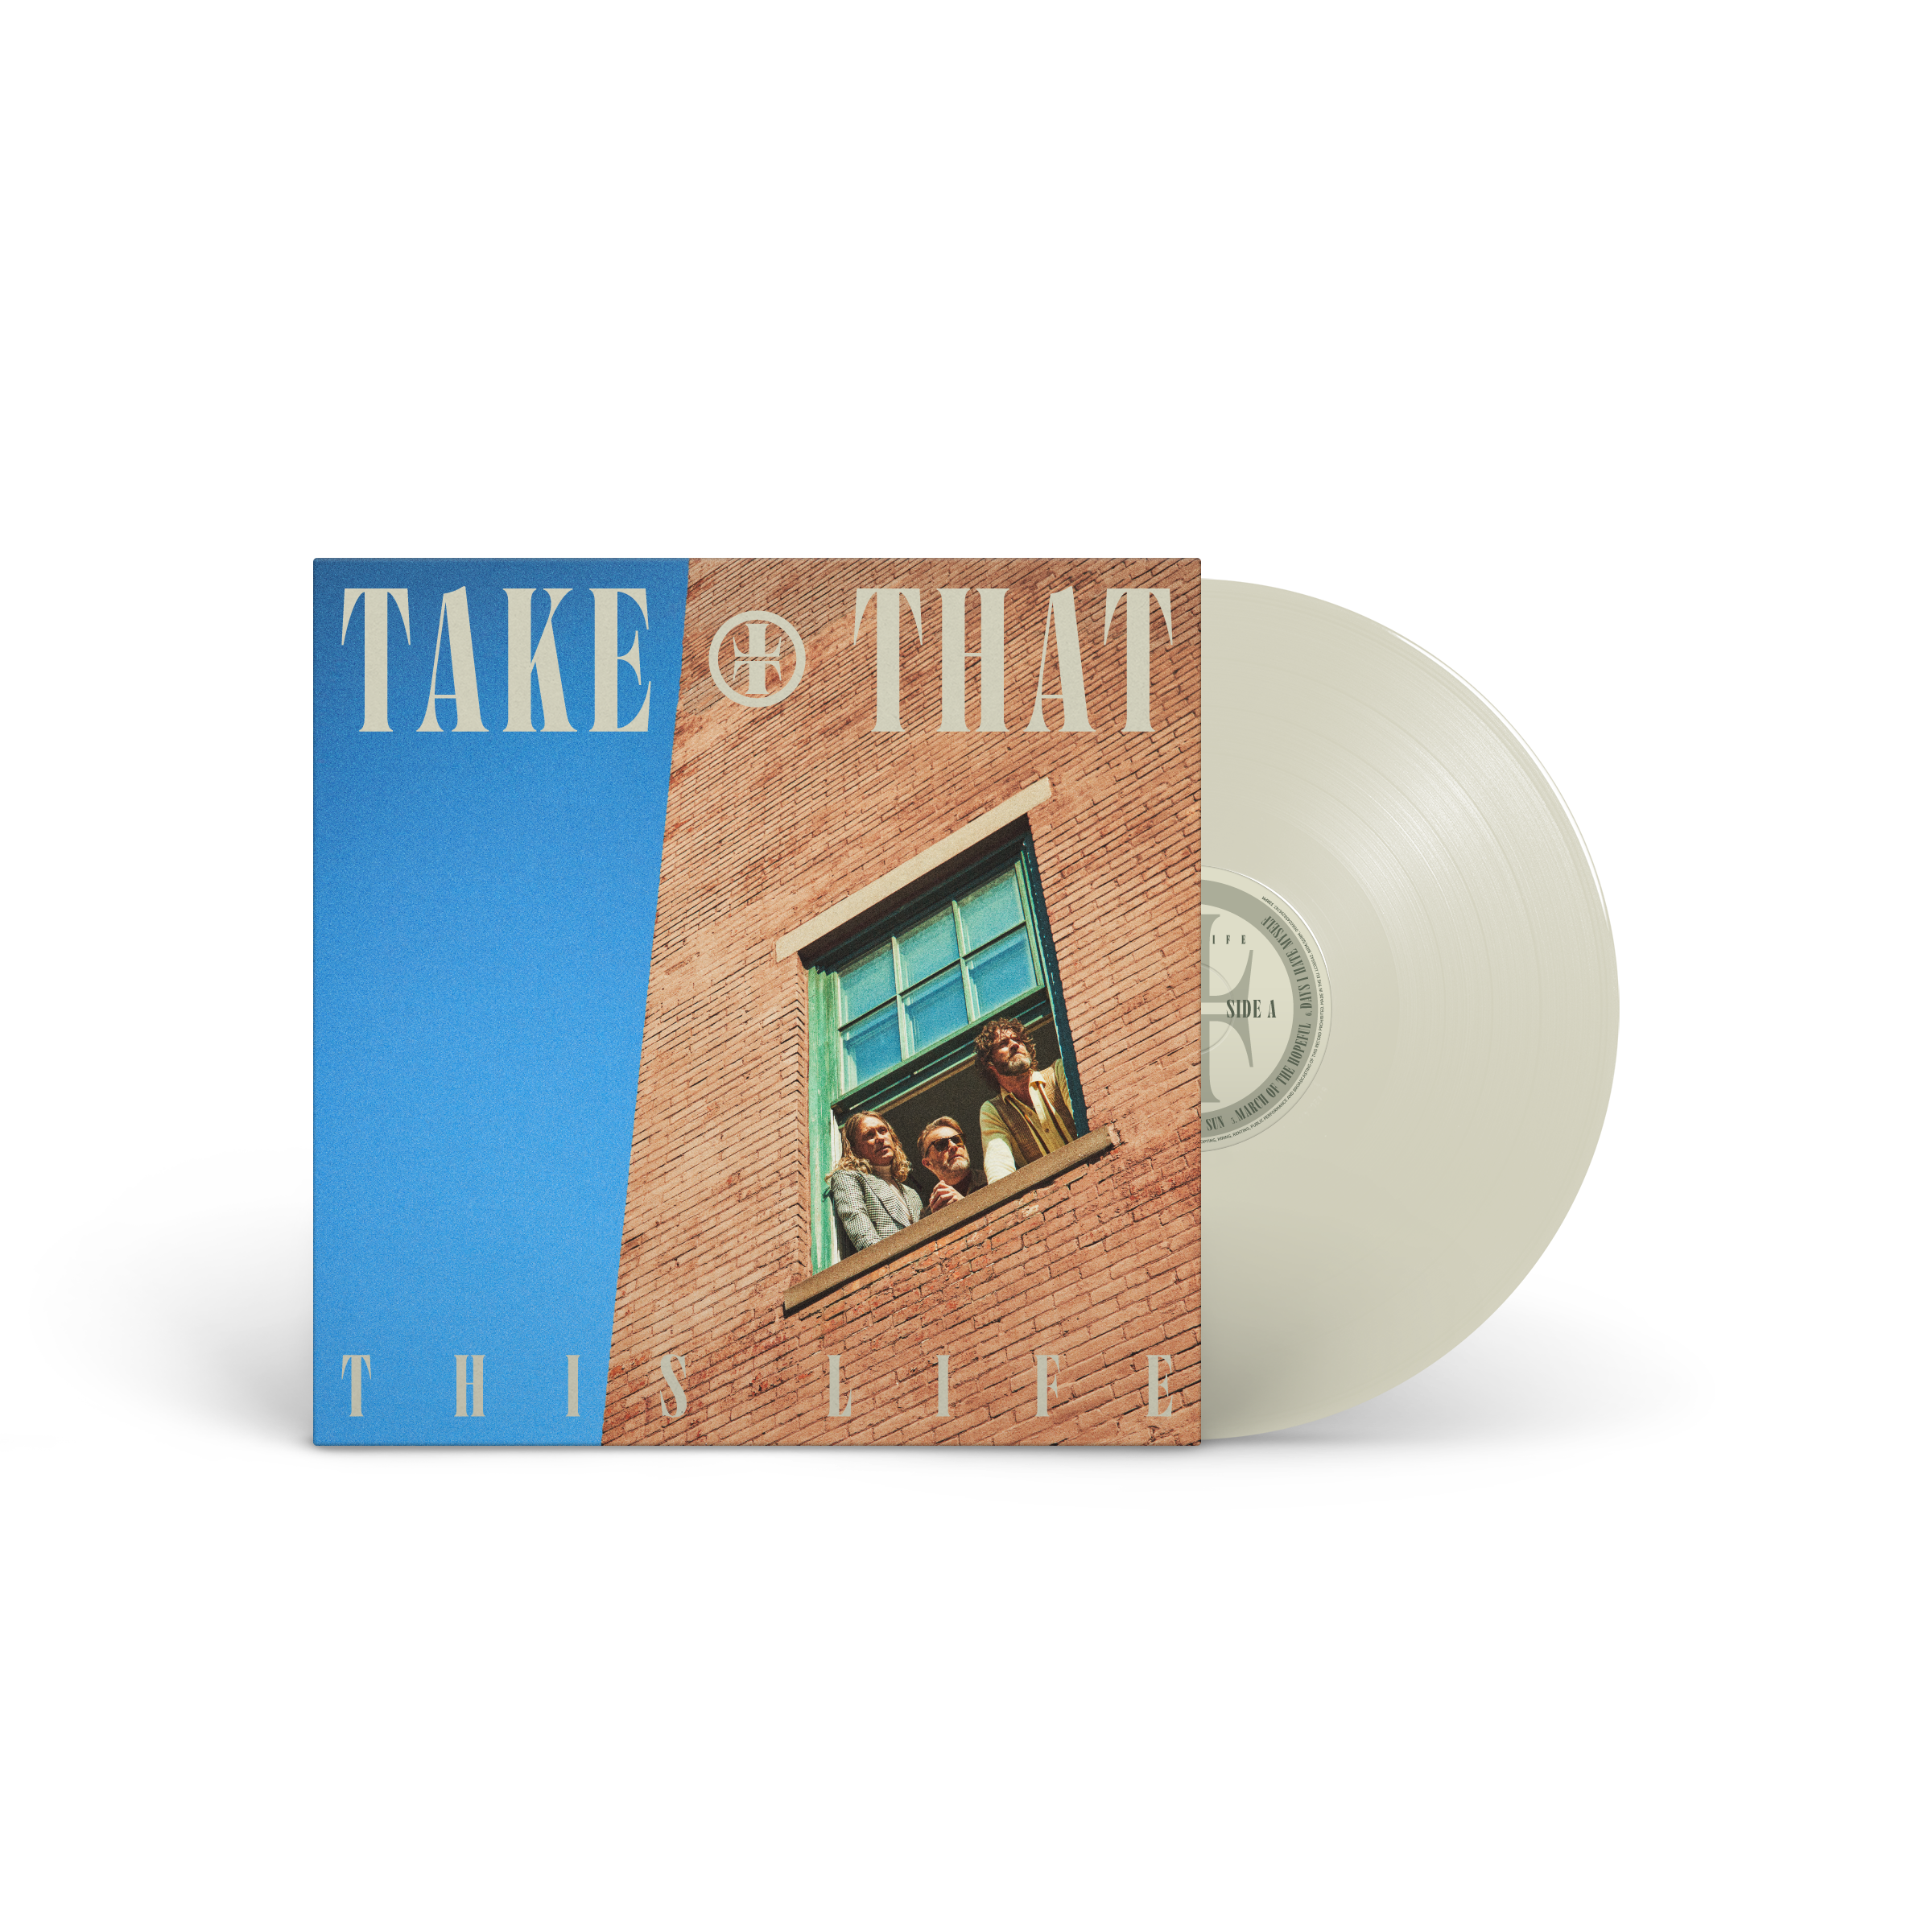 Take That - Limited Edition Cream Vinyl LP